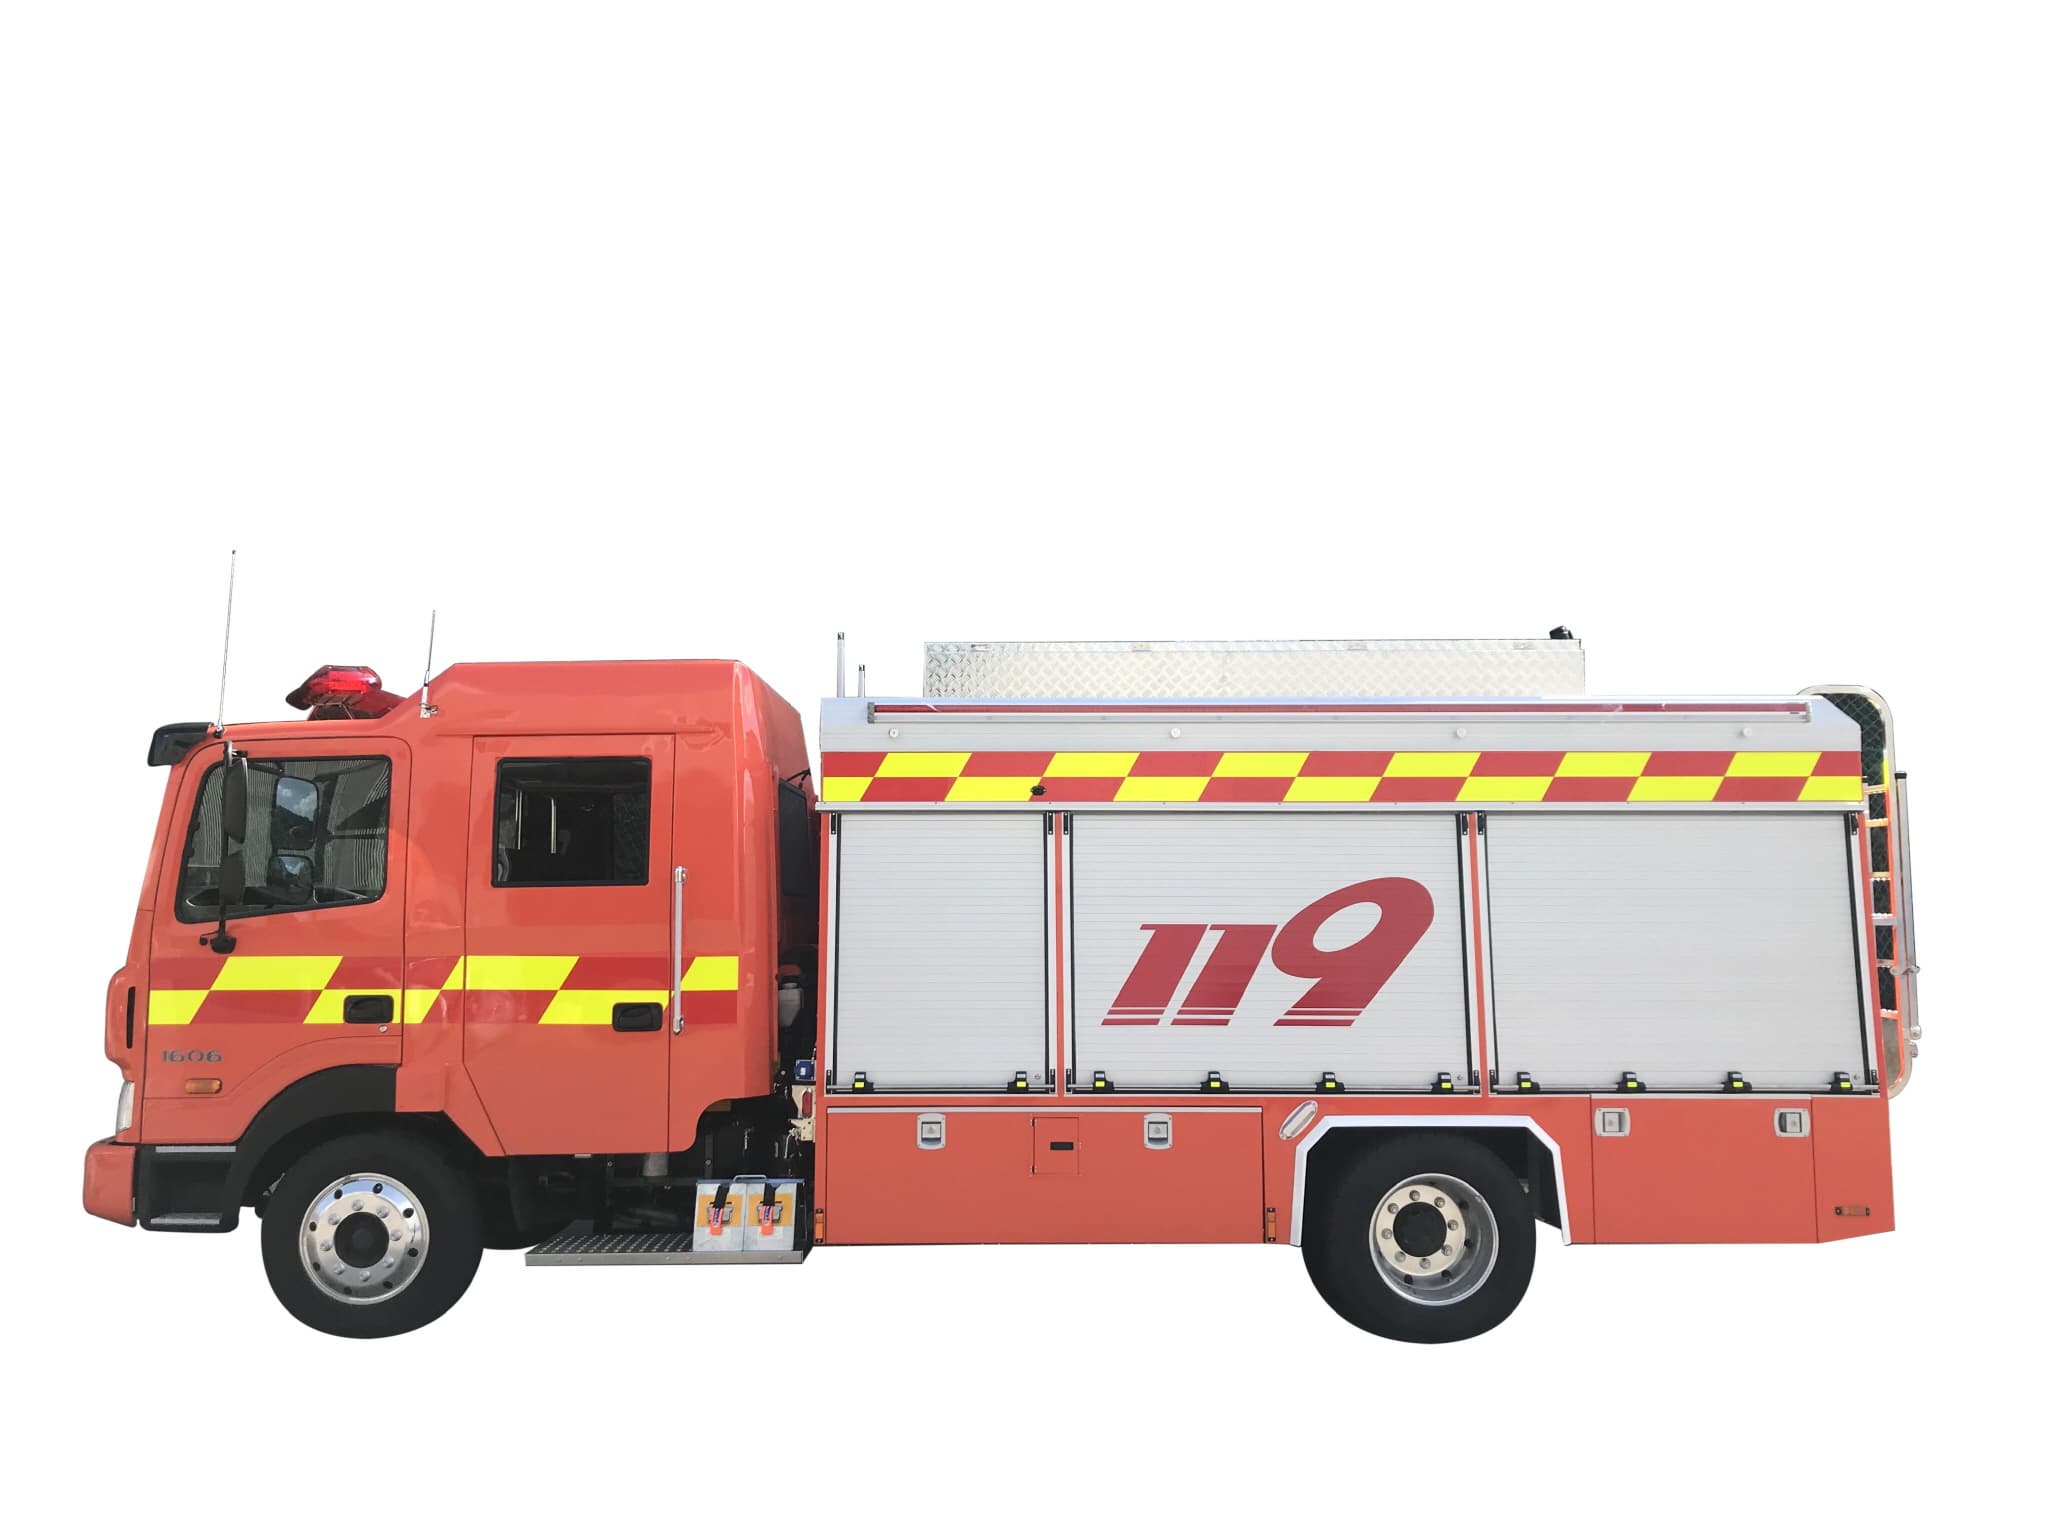 Fire fighting water tank vehicle